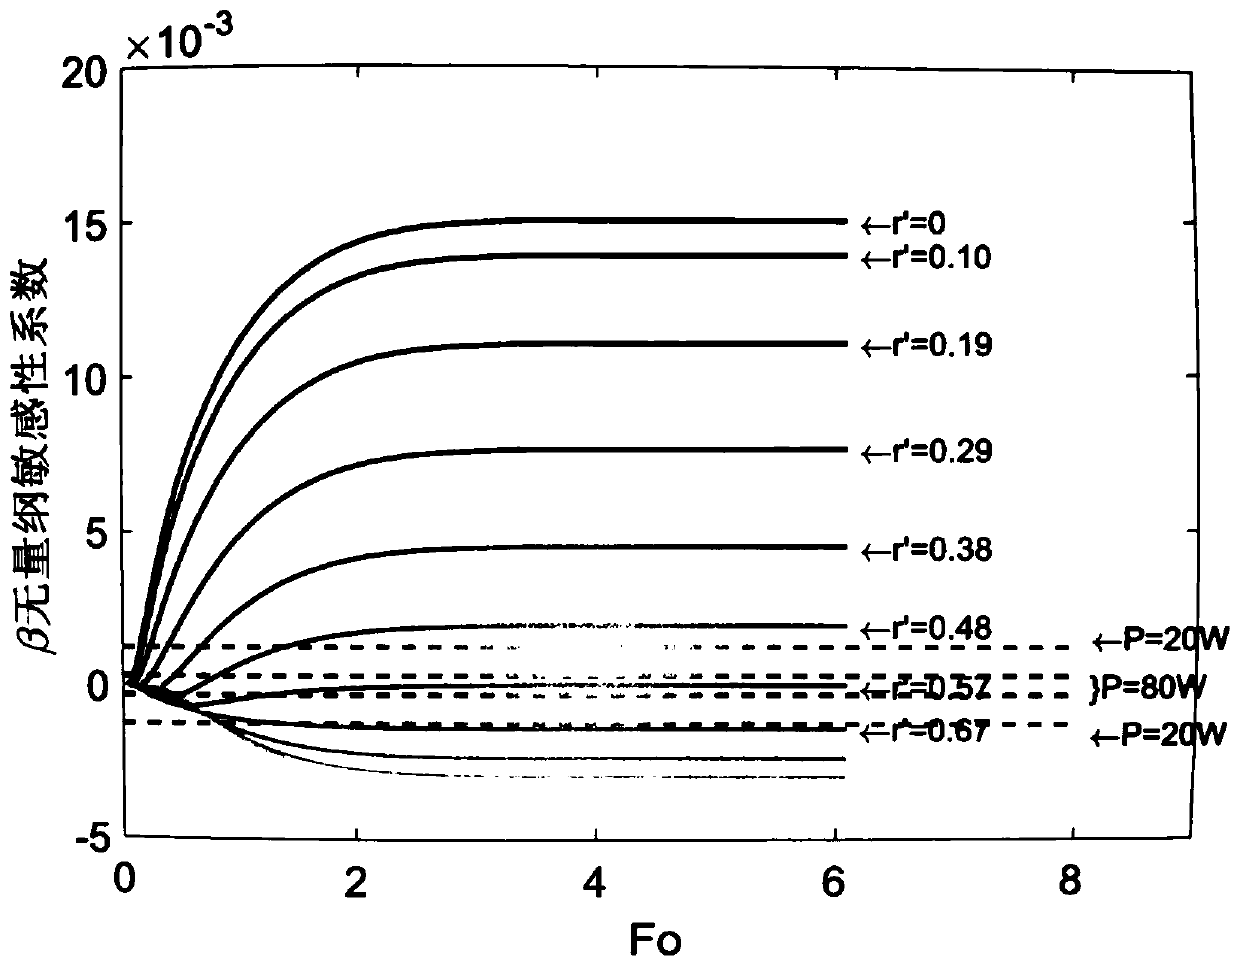 Battery thermal parameter identification method based on dimensionless model